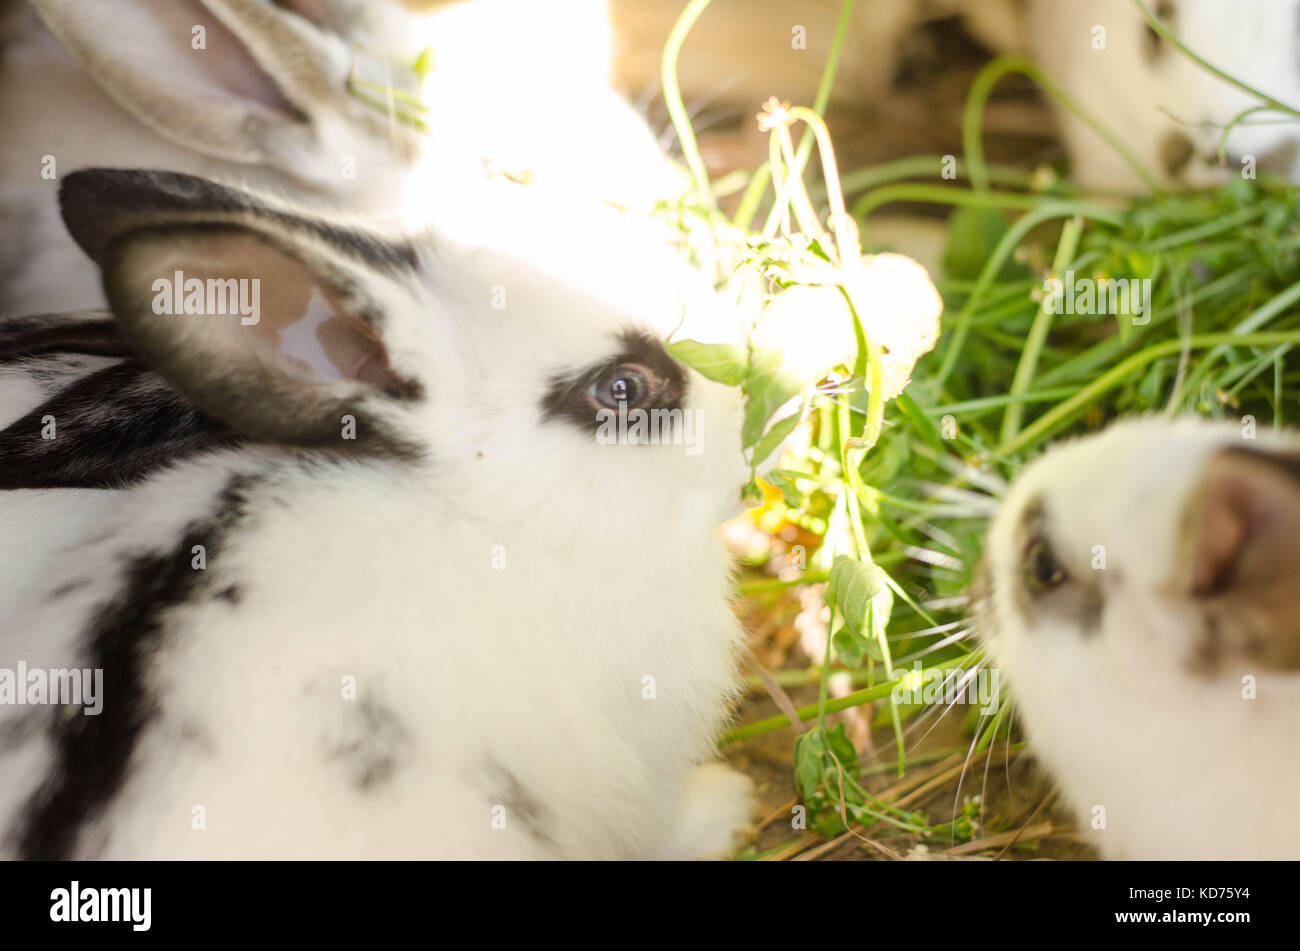 Feeding rabbits on animal farm in rabbit-hutch. Stock Photo